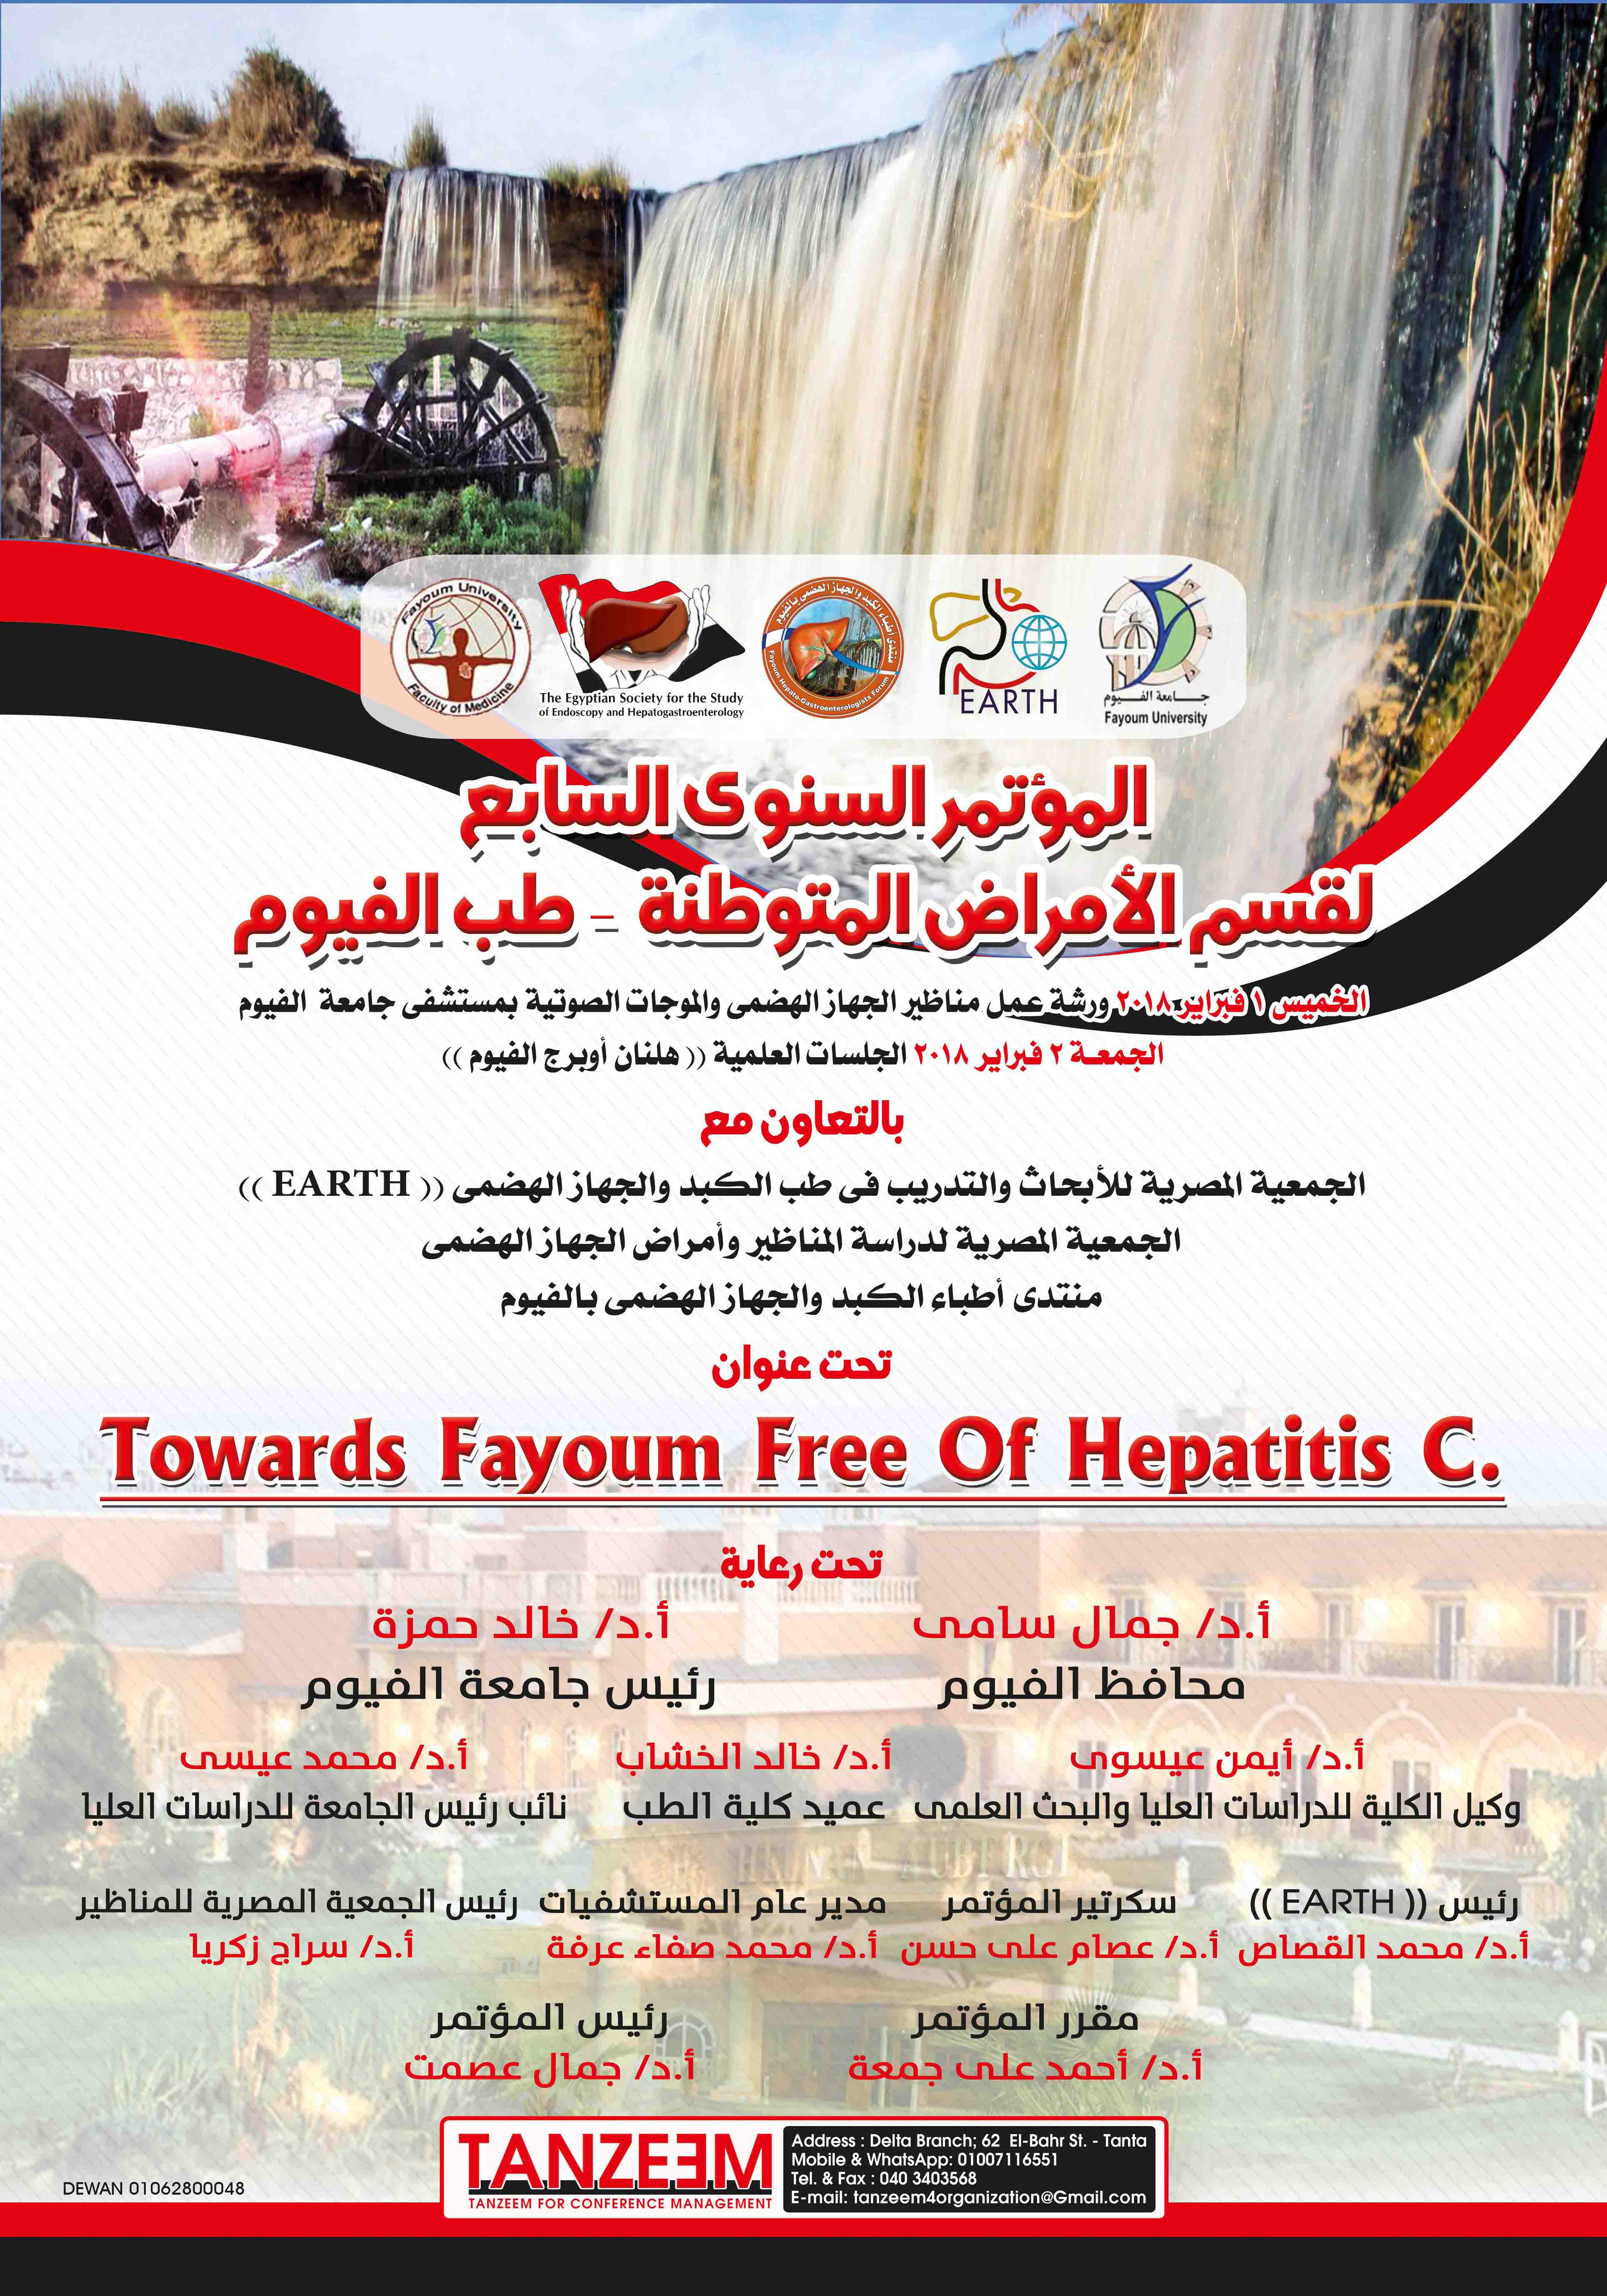 Towards Fayoum Free of Hepatitis C.